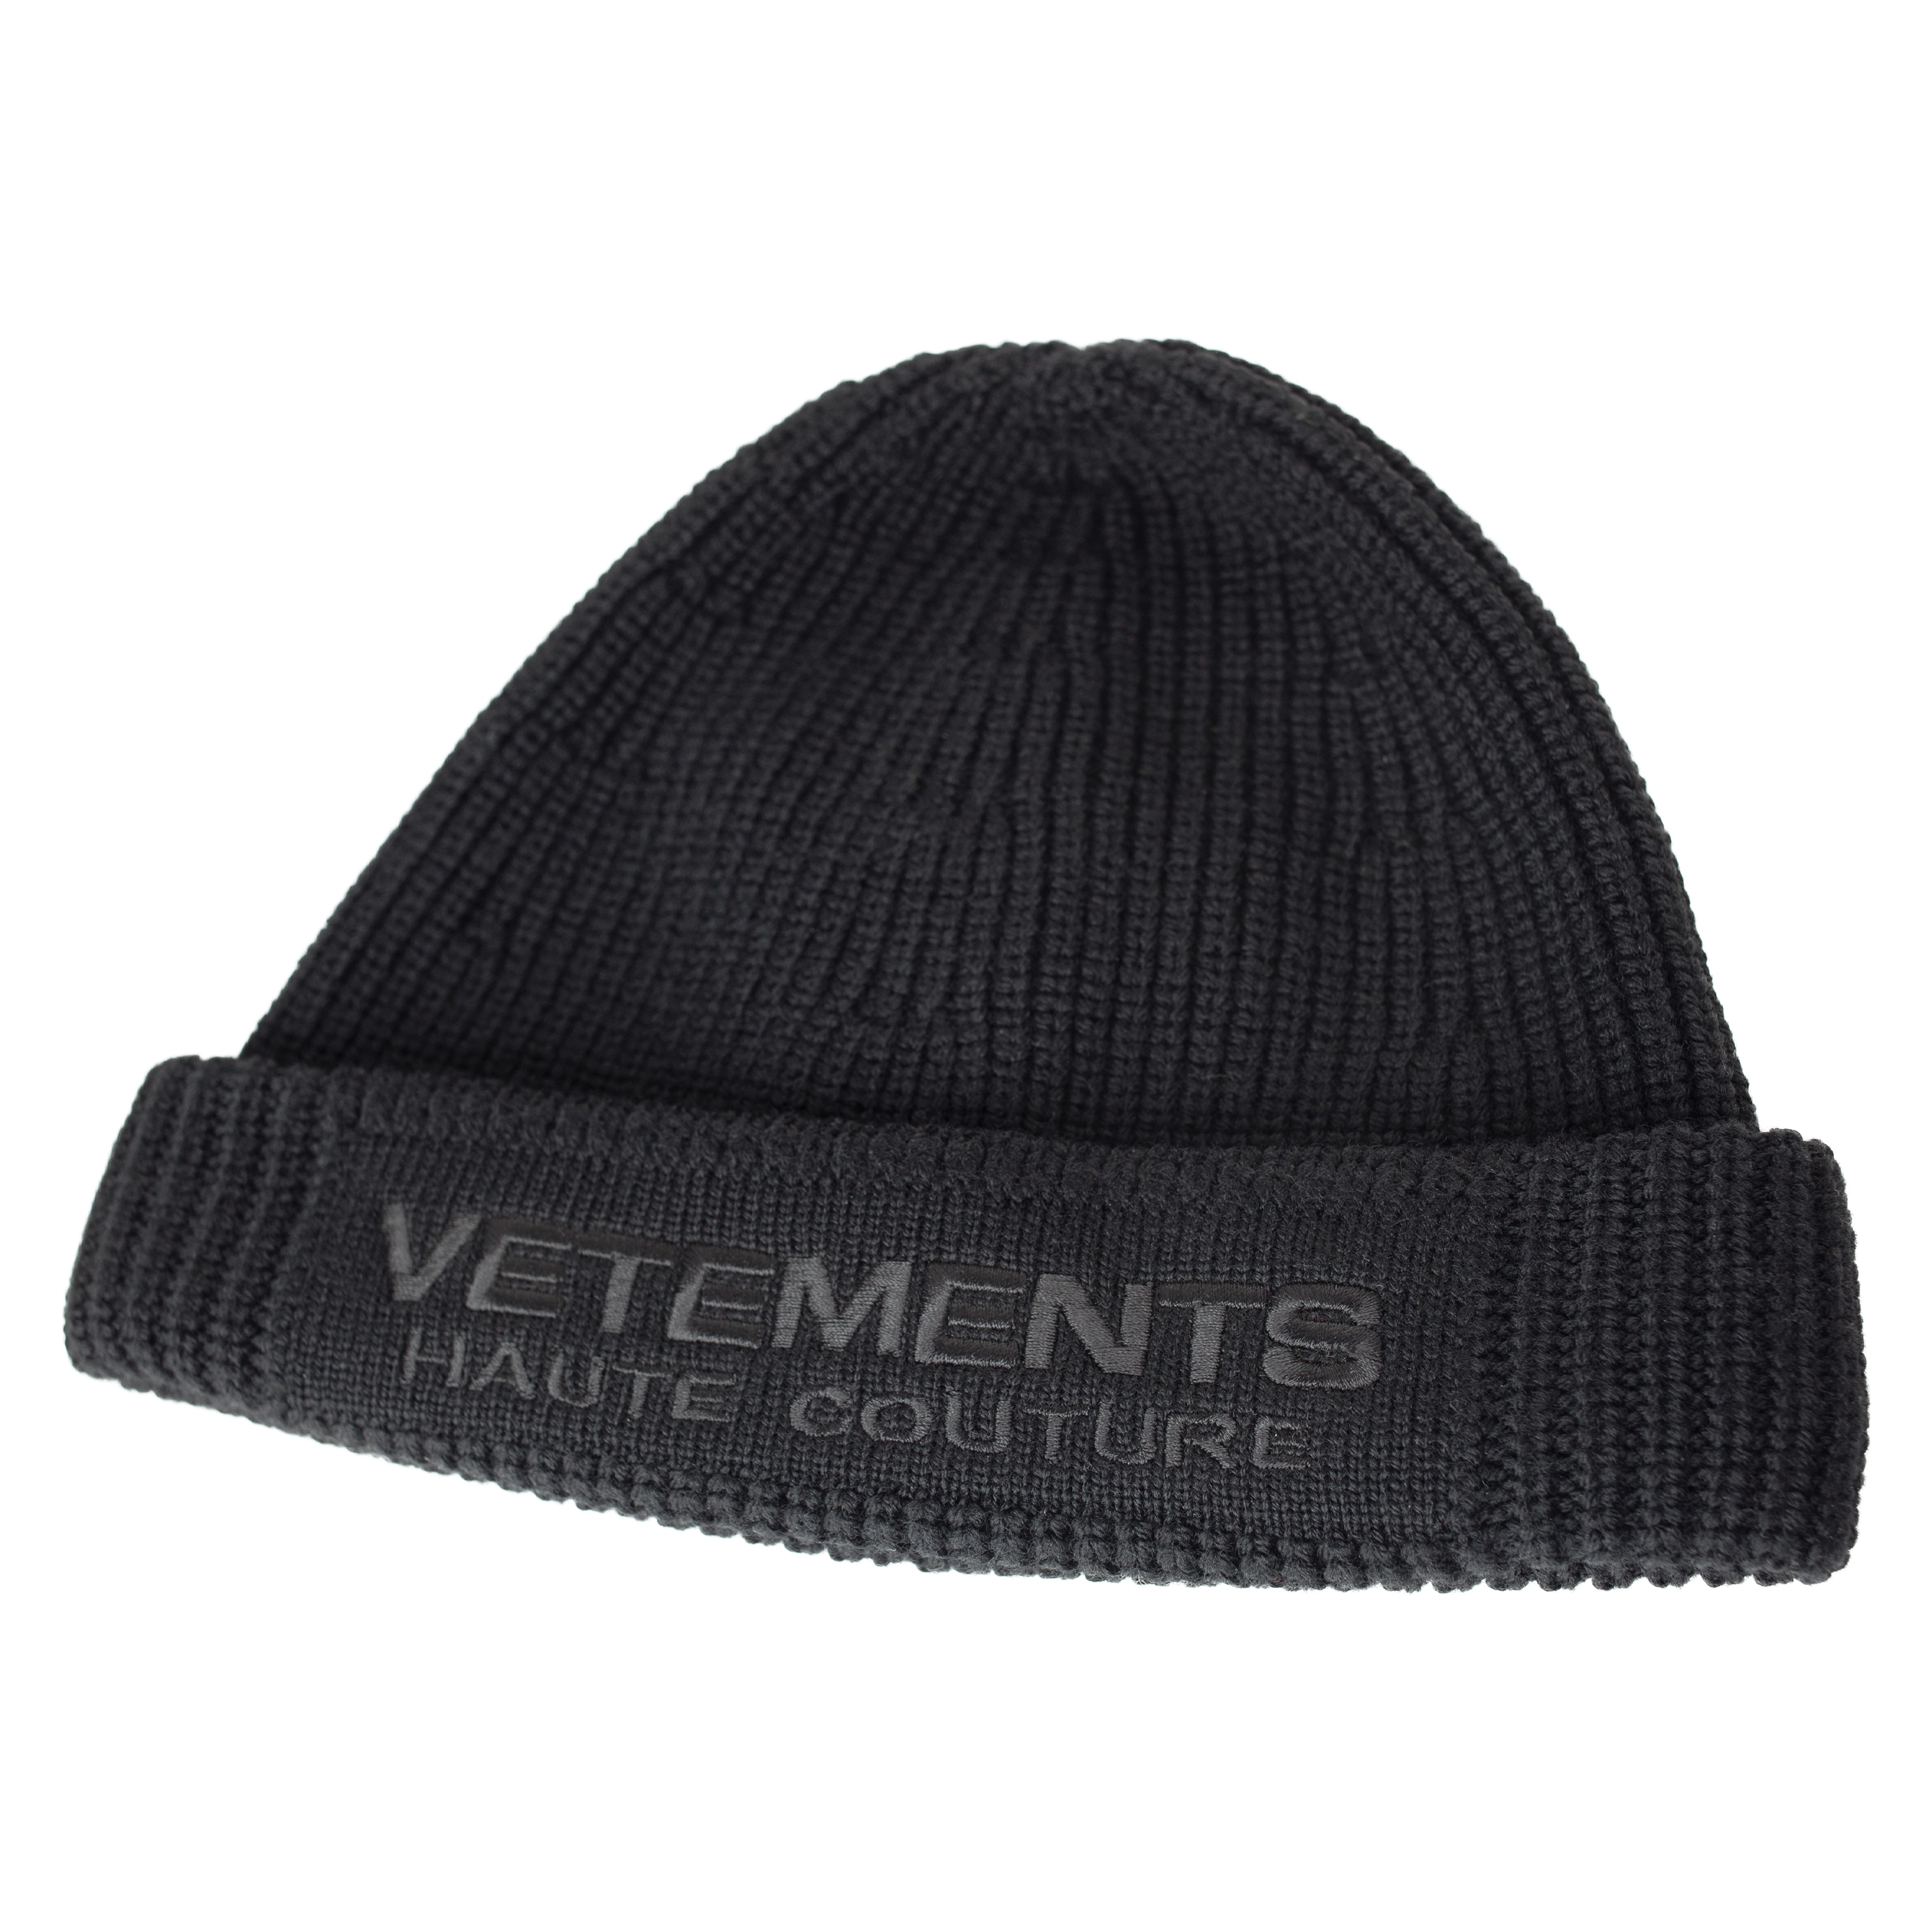 Черная шапка с вышивкой VETEMENTS UE51SA500B/1399, размер One Size